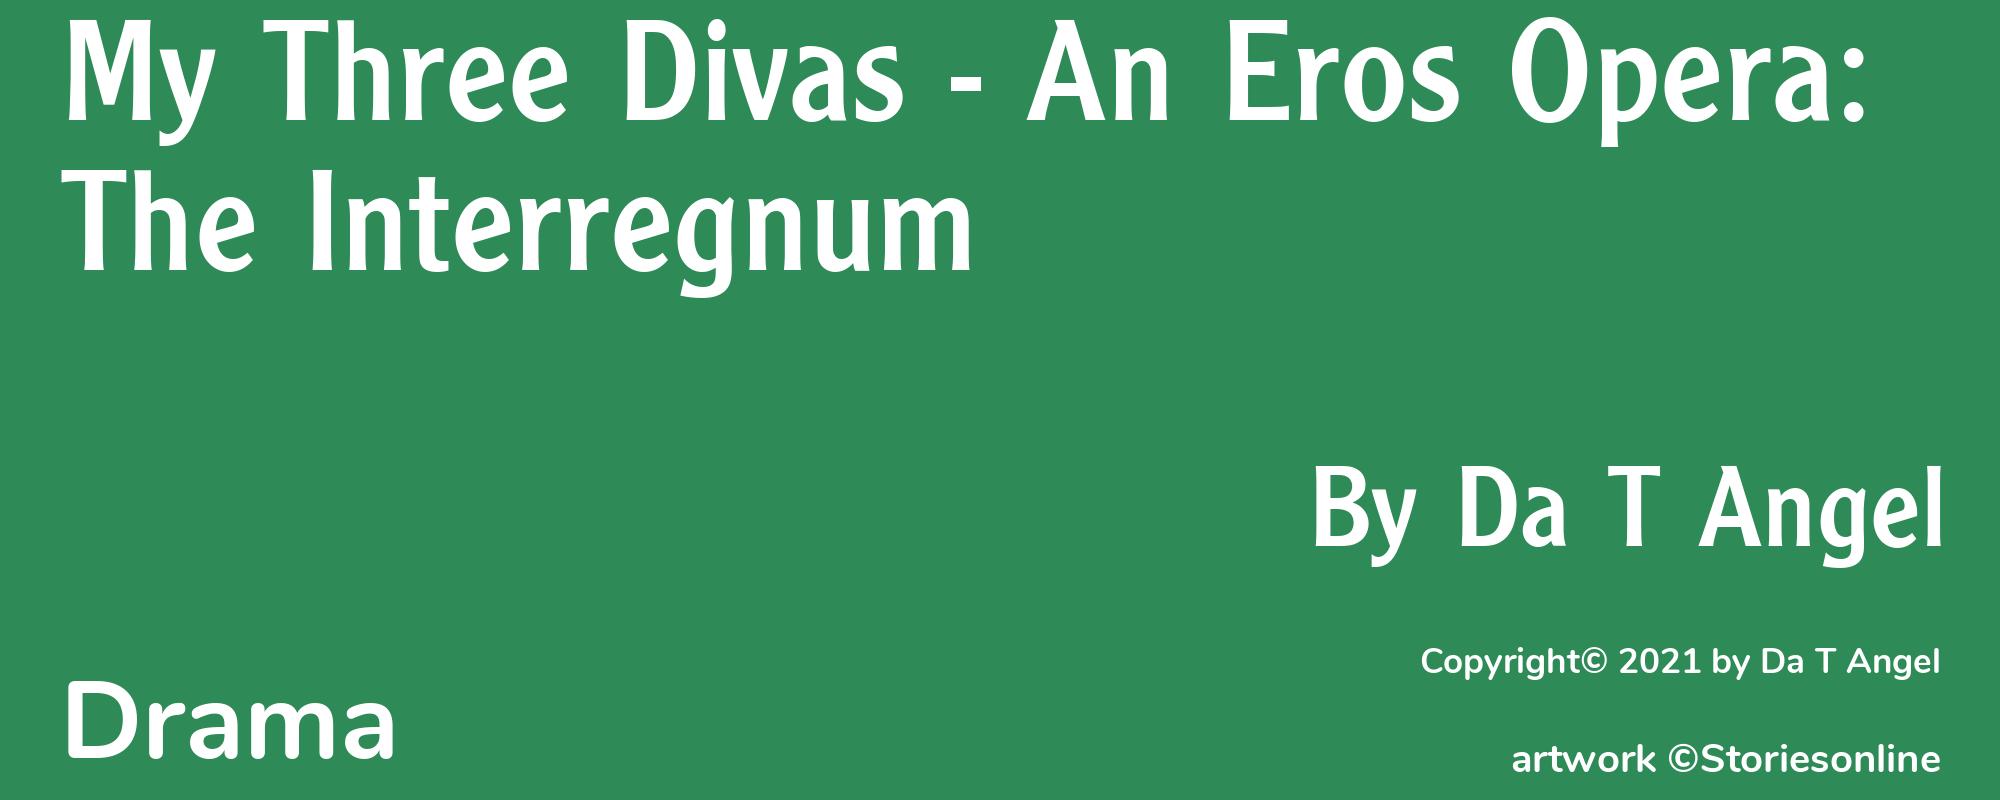 My Three Divas - An Eros Opera: The Interregnum - Cover